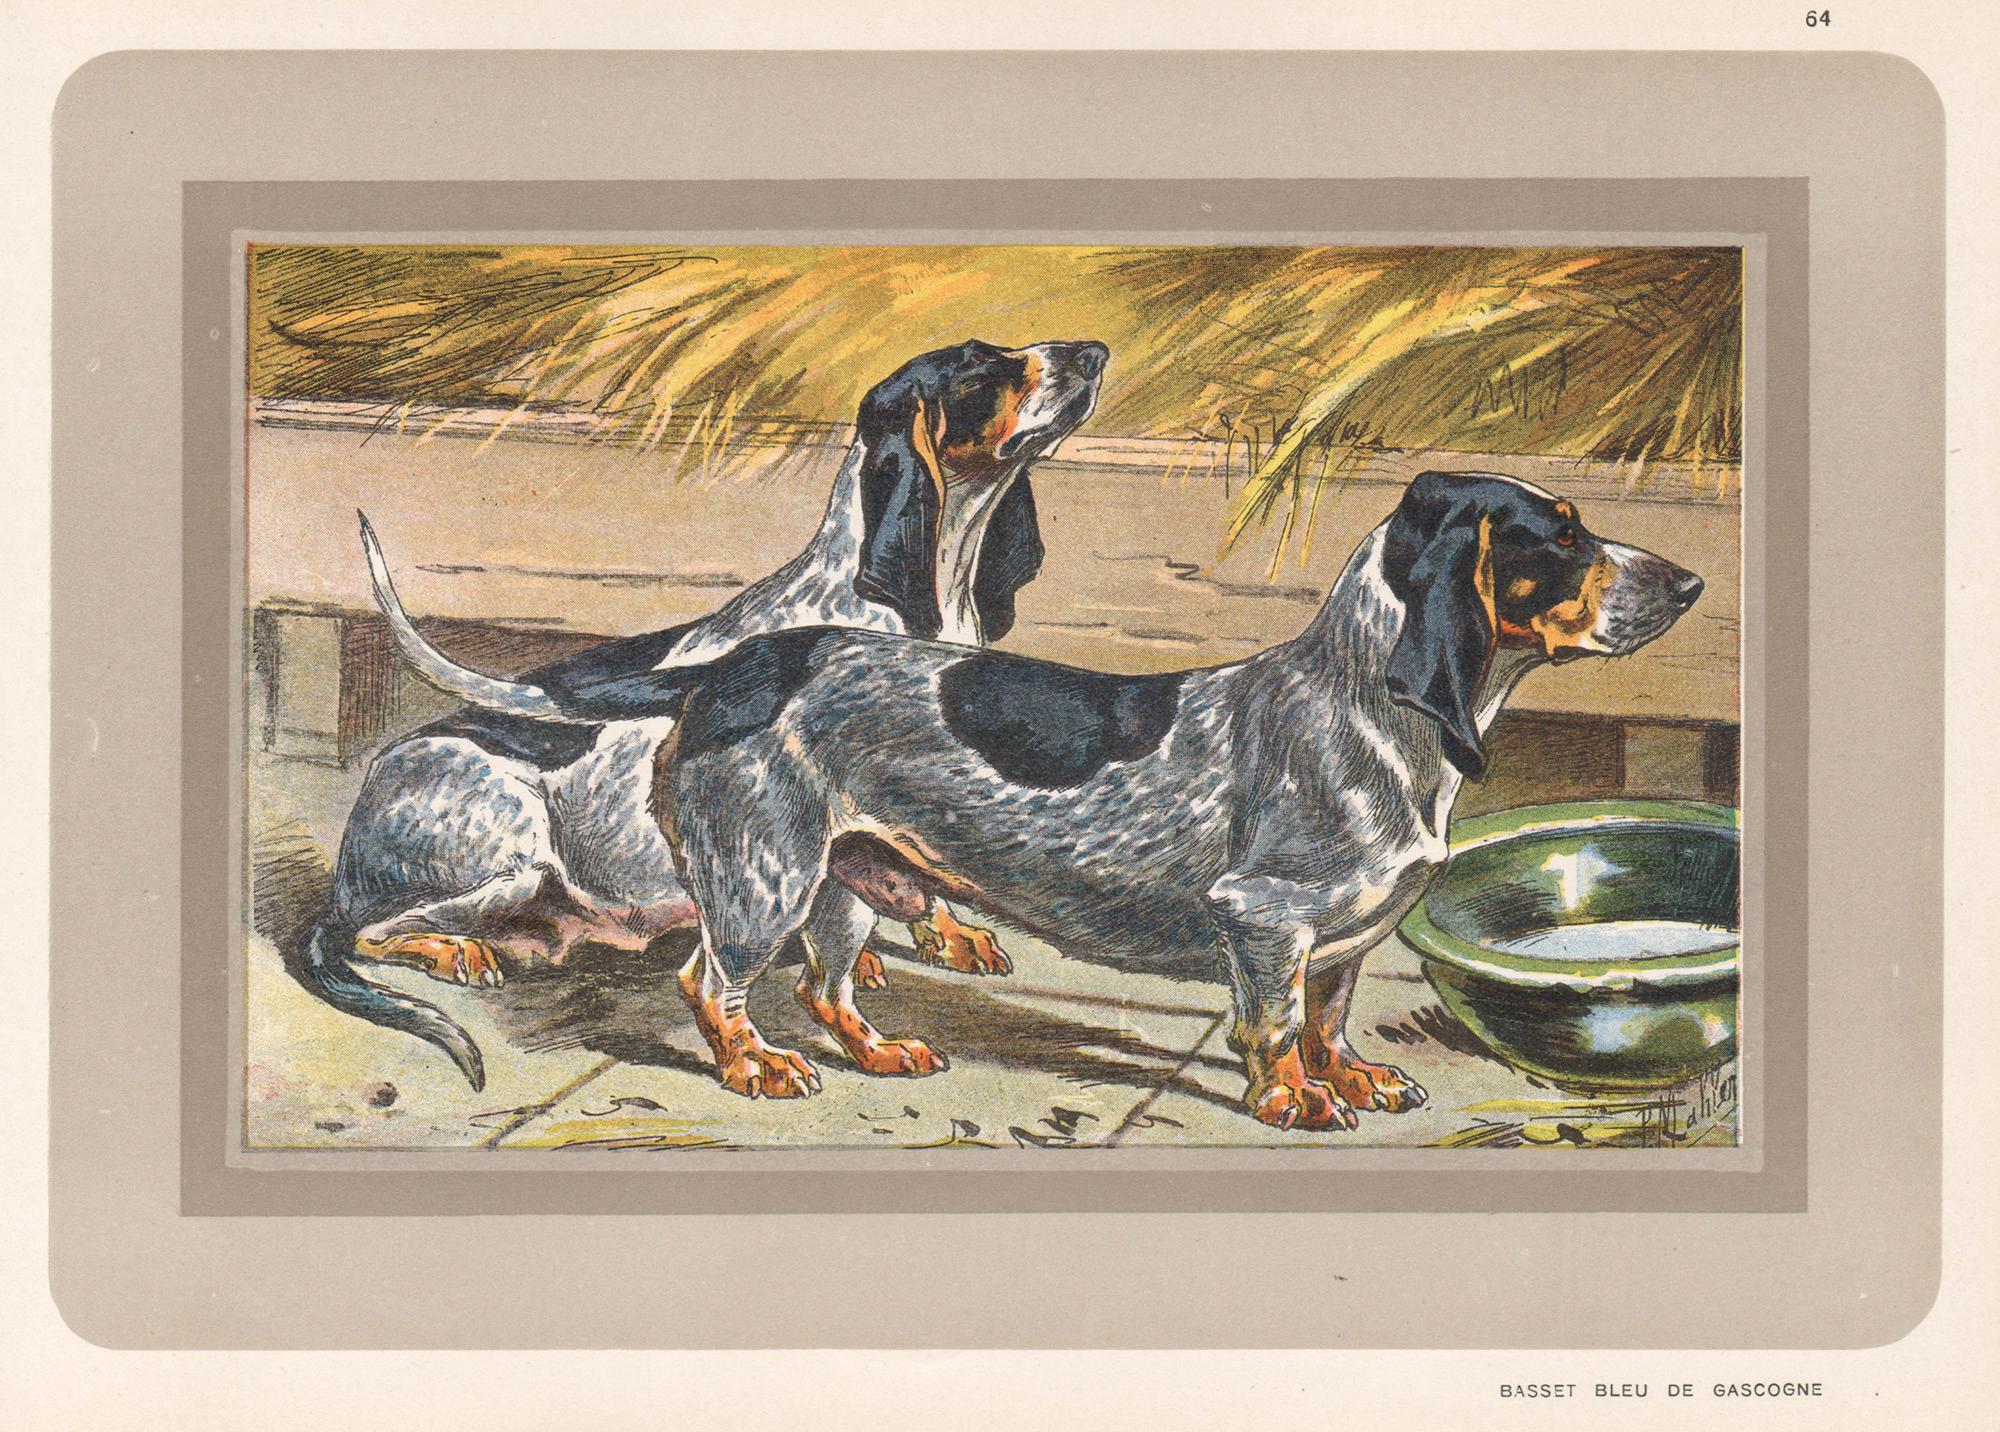 P. Mahler Animal Print - Basset Bleu de Gascogne, French hound dog chromolithograph print, 1930s